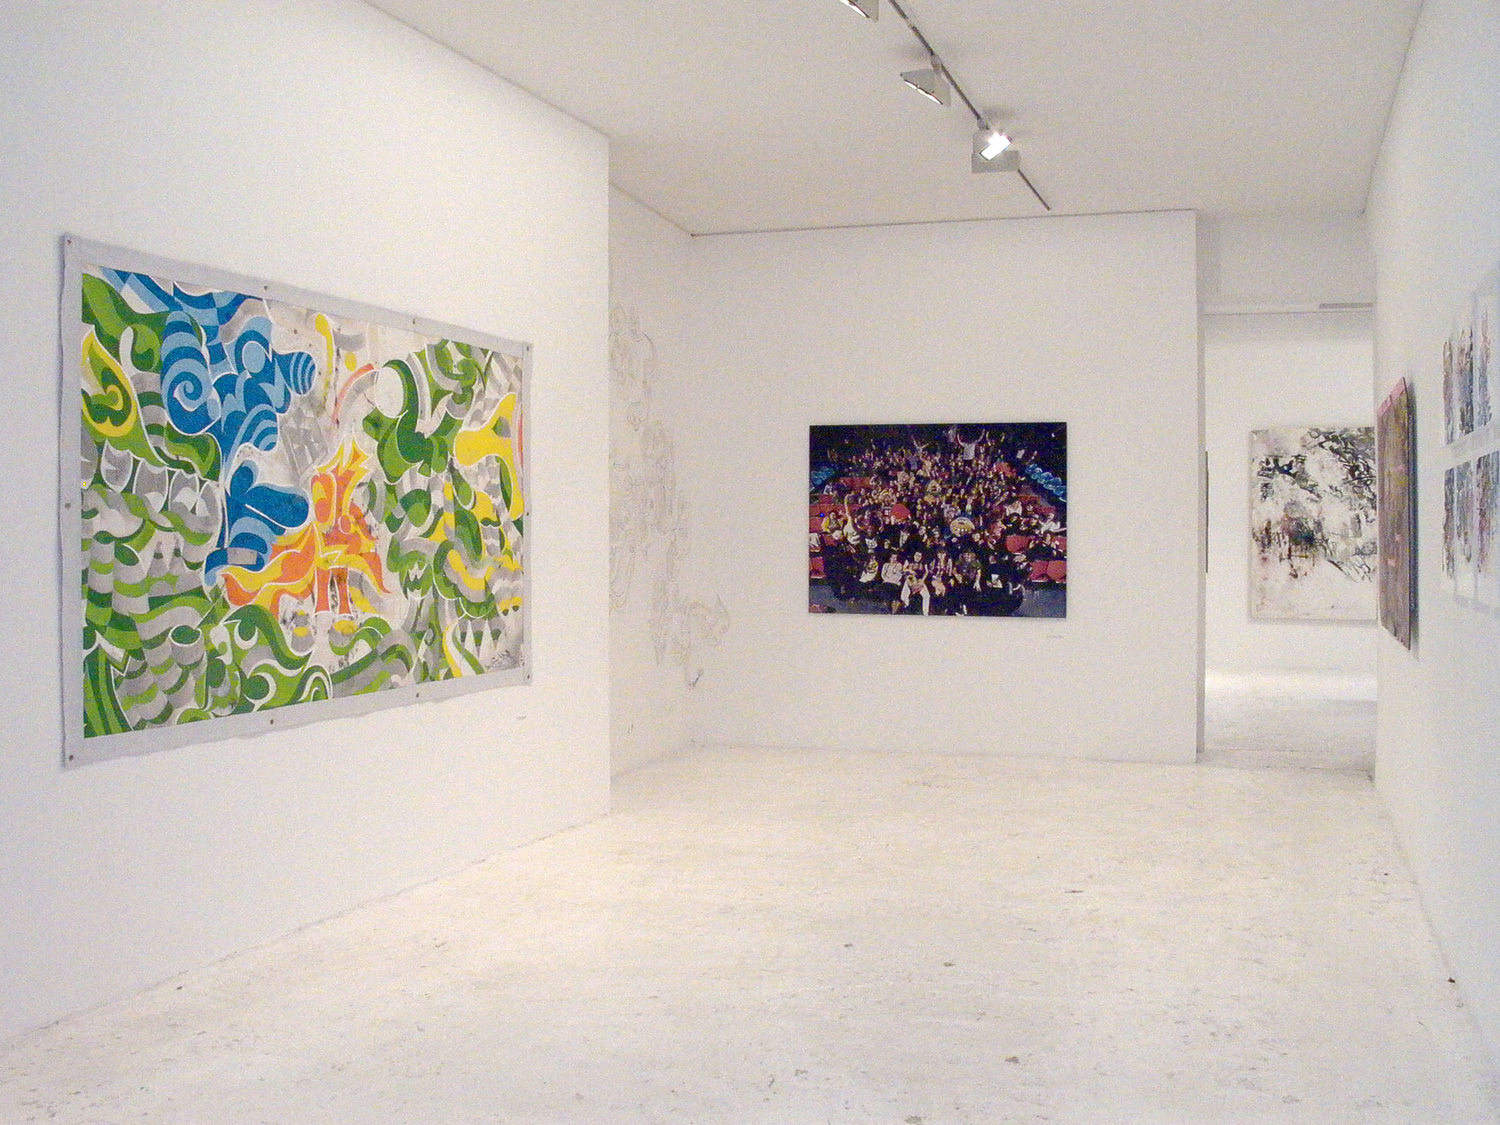  Installation view,  What About New York?   Galerie Du Jour  Paris, France, 2003 